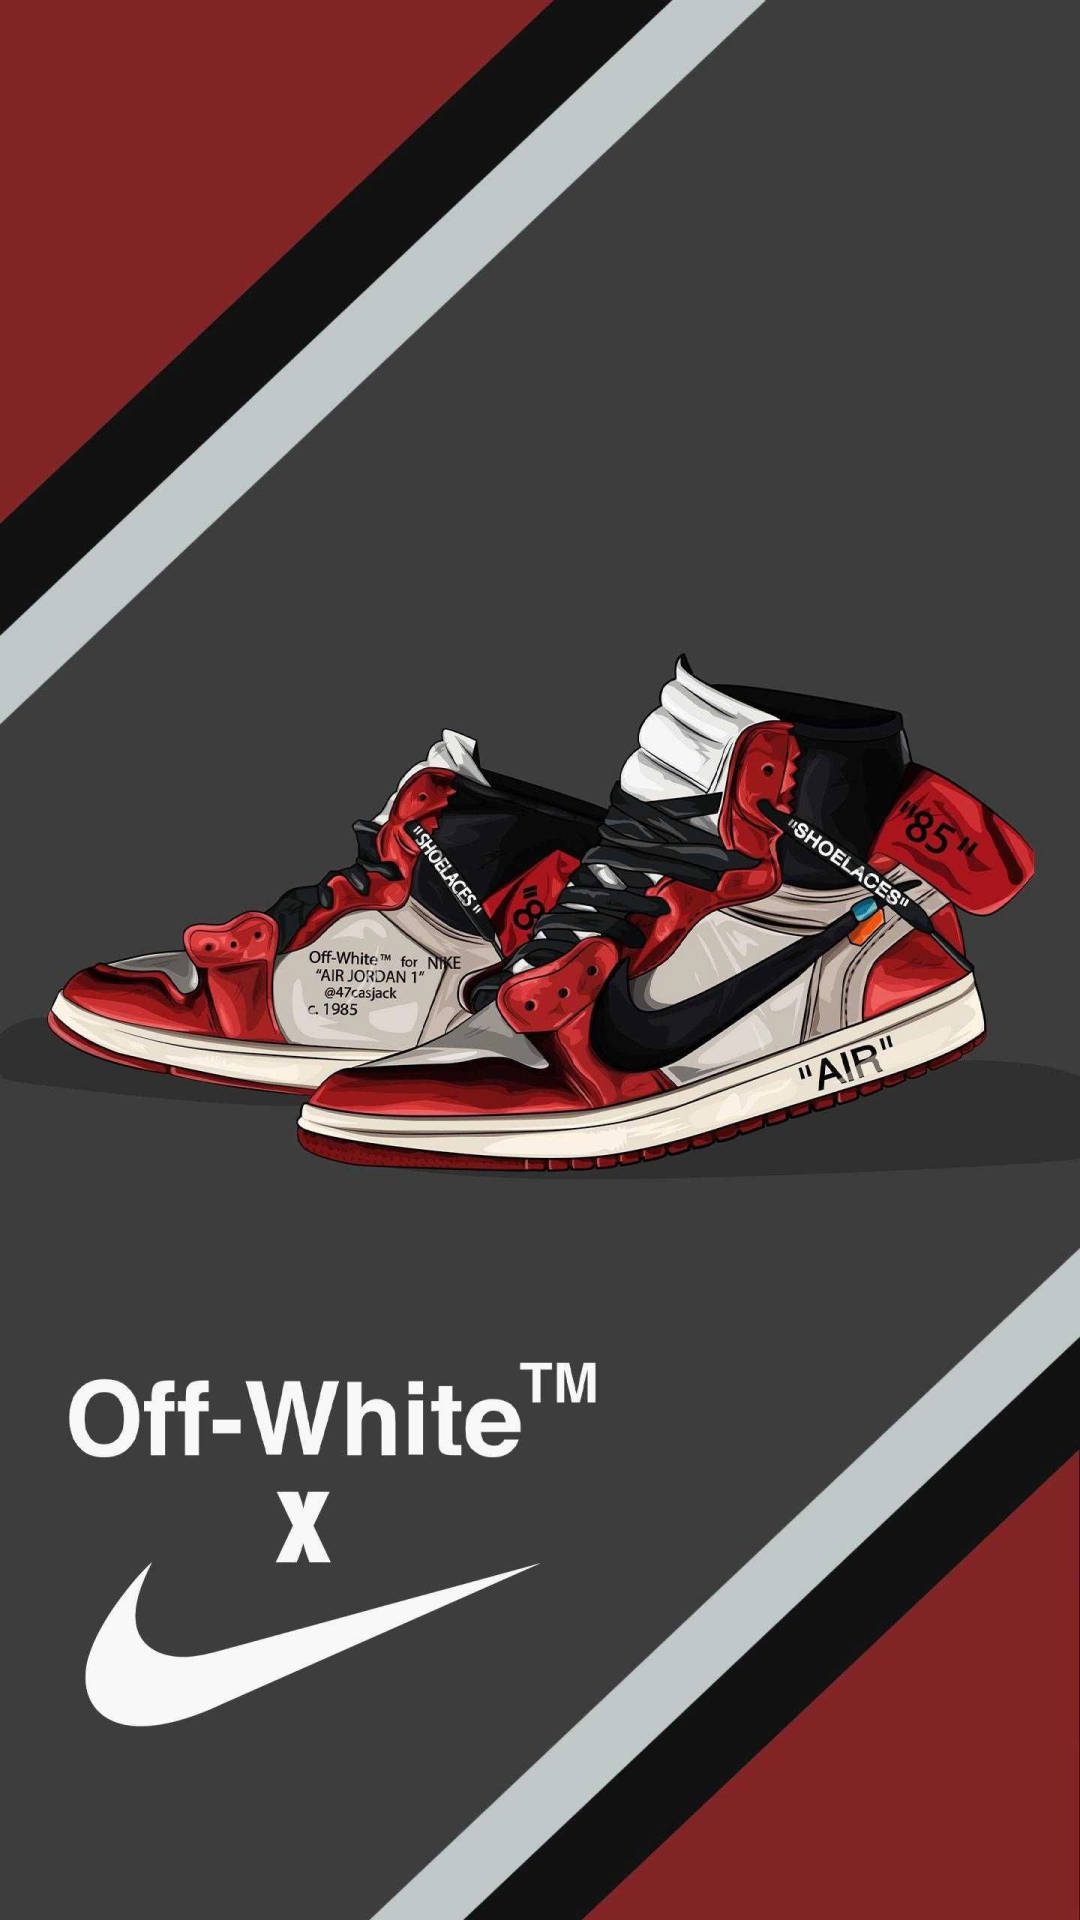 Off-White X Nike Shoes Wallpaper